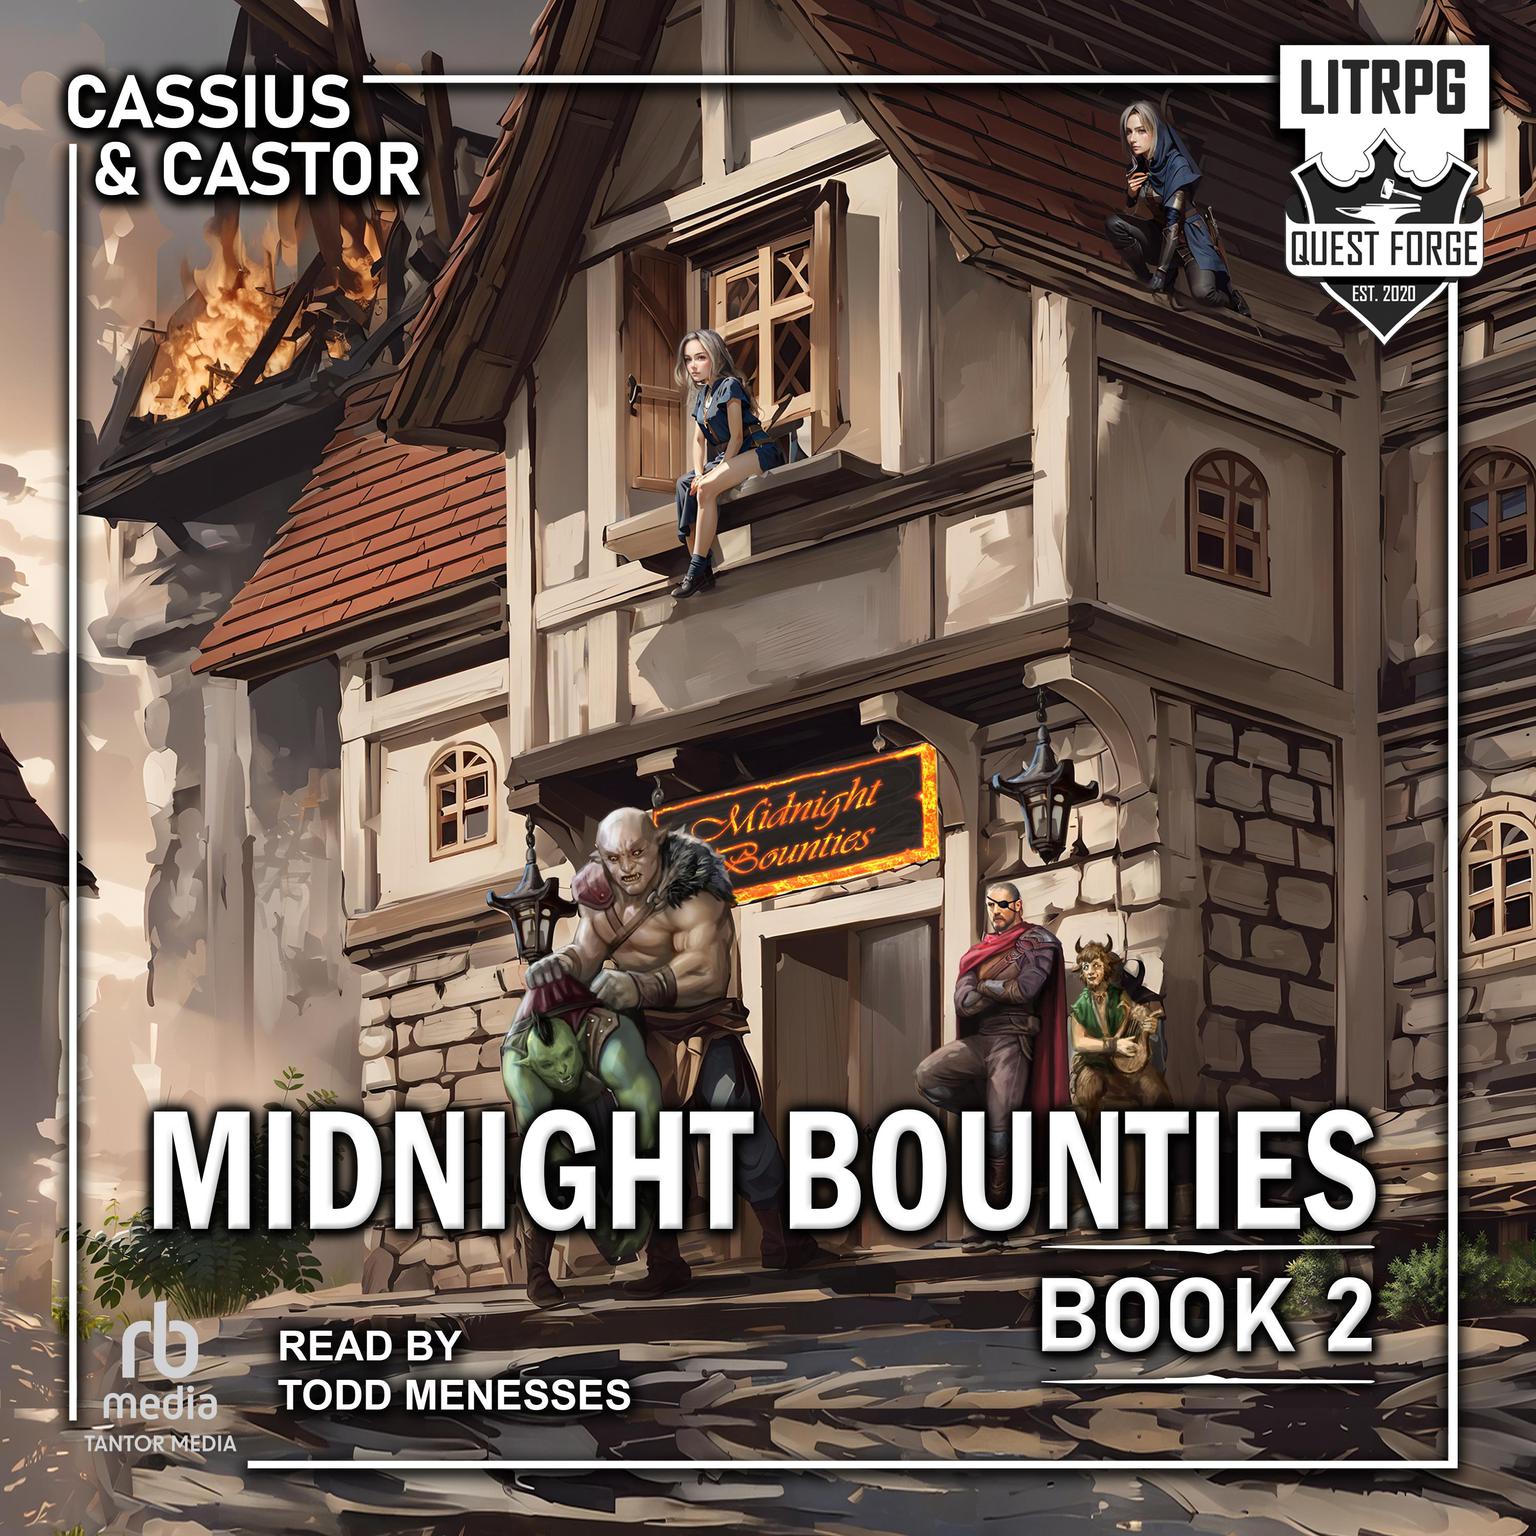 Midnight Bounties 2 Audiobook, by Castor 